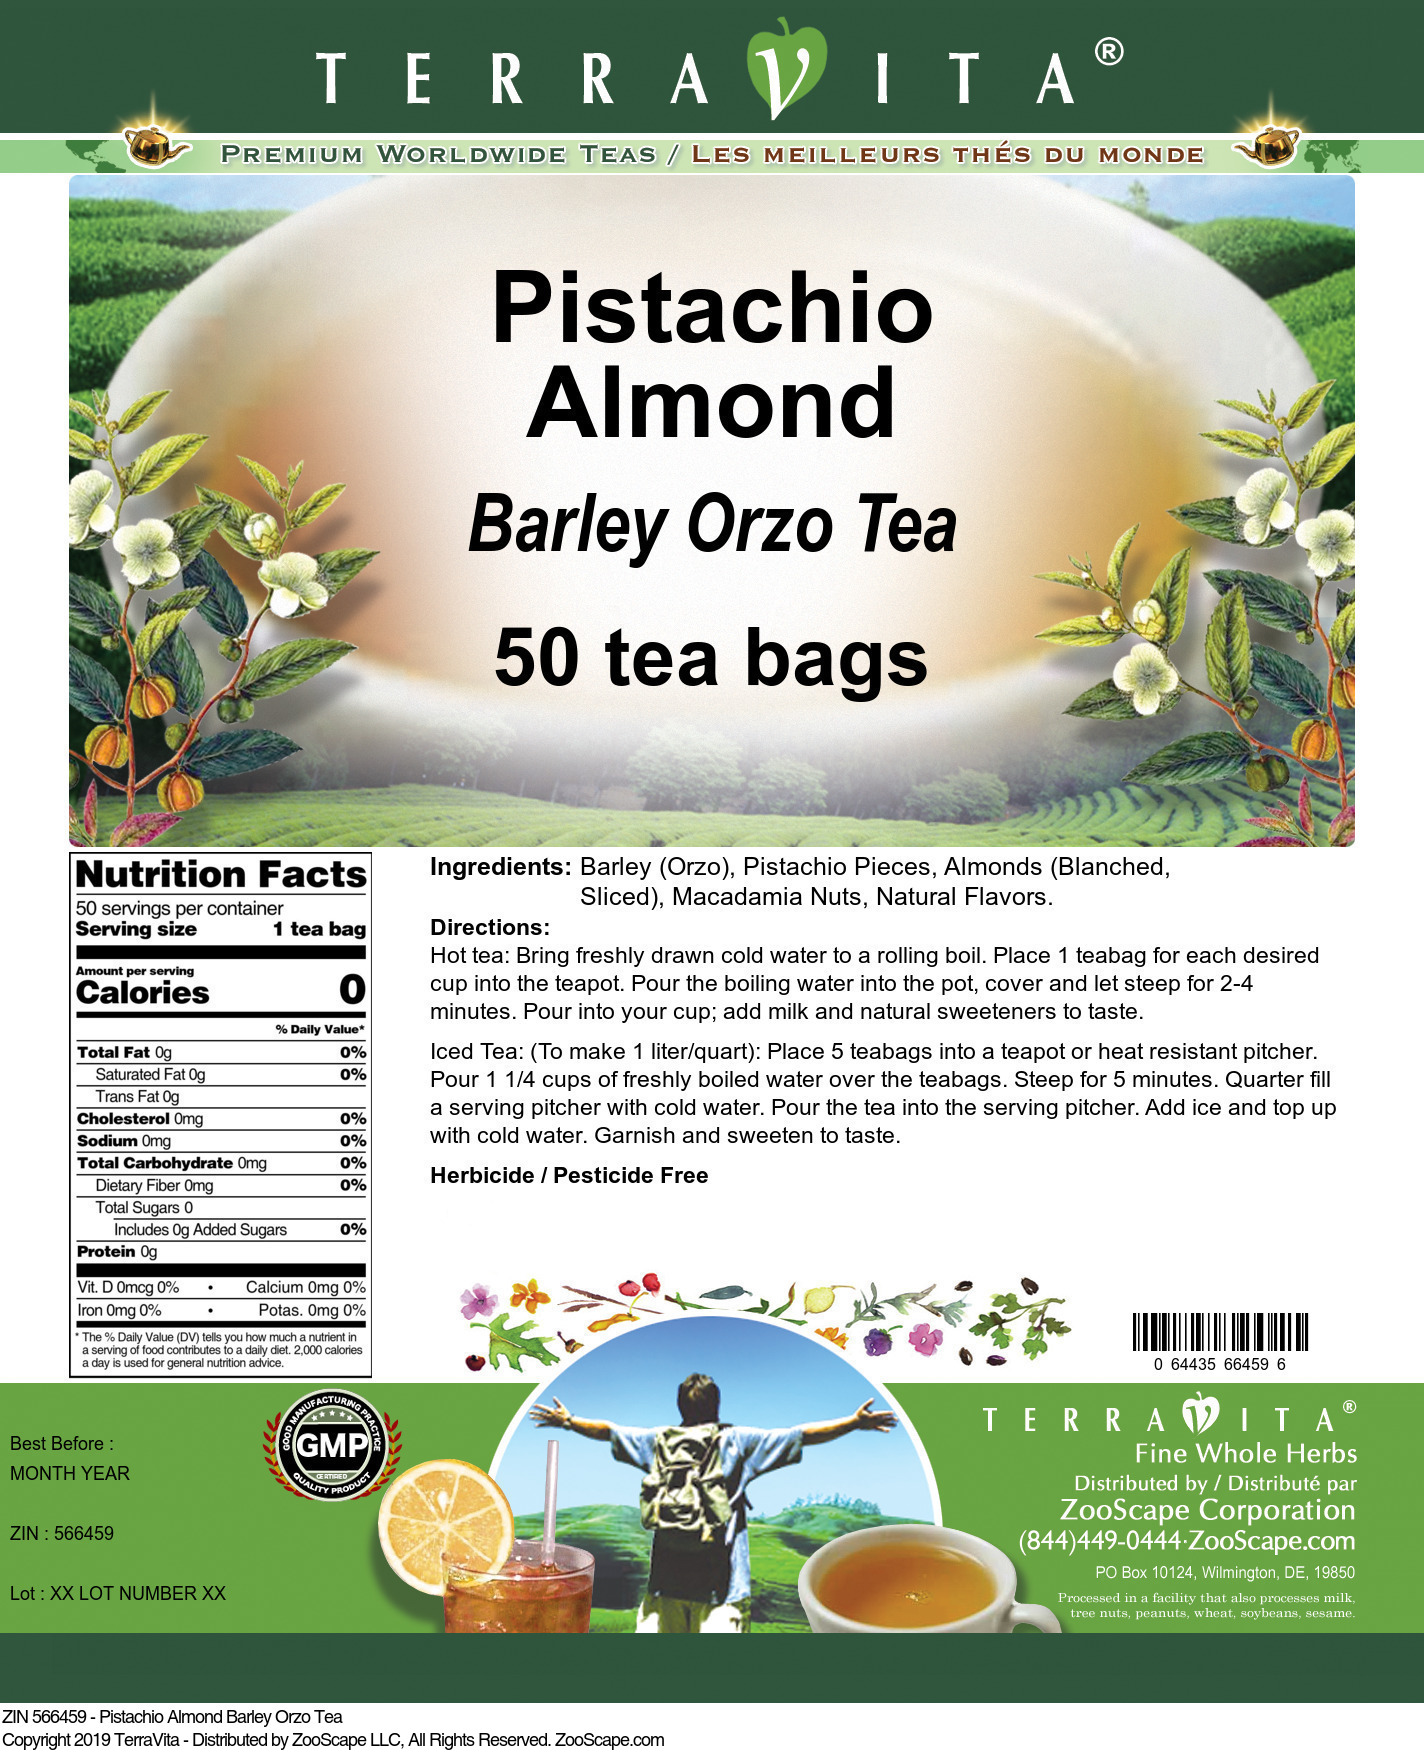 Pistachio Almond Barley Orzo Tea - Label